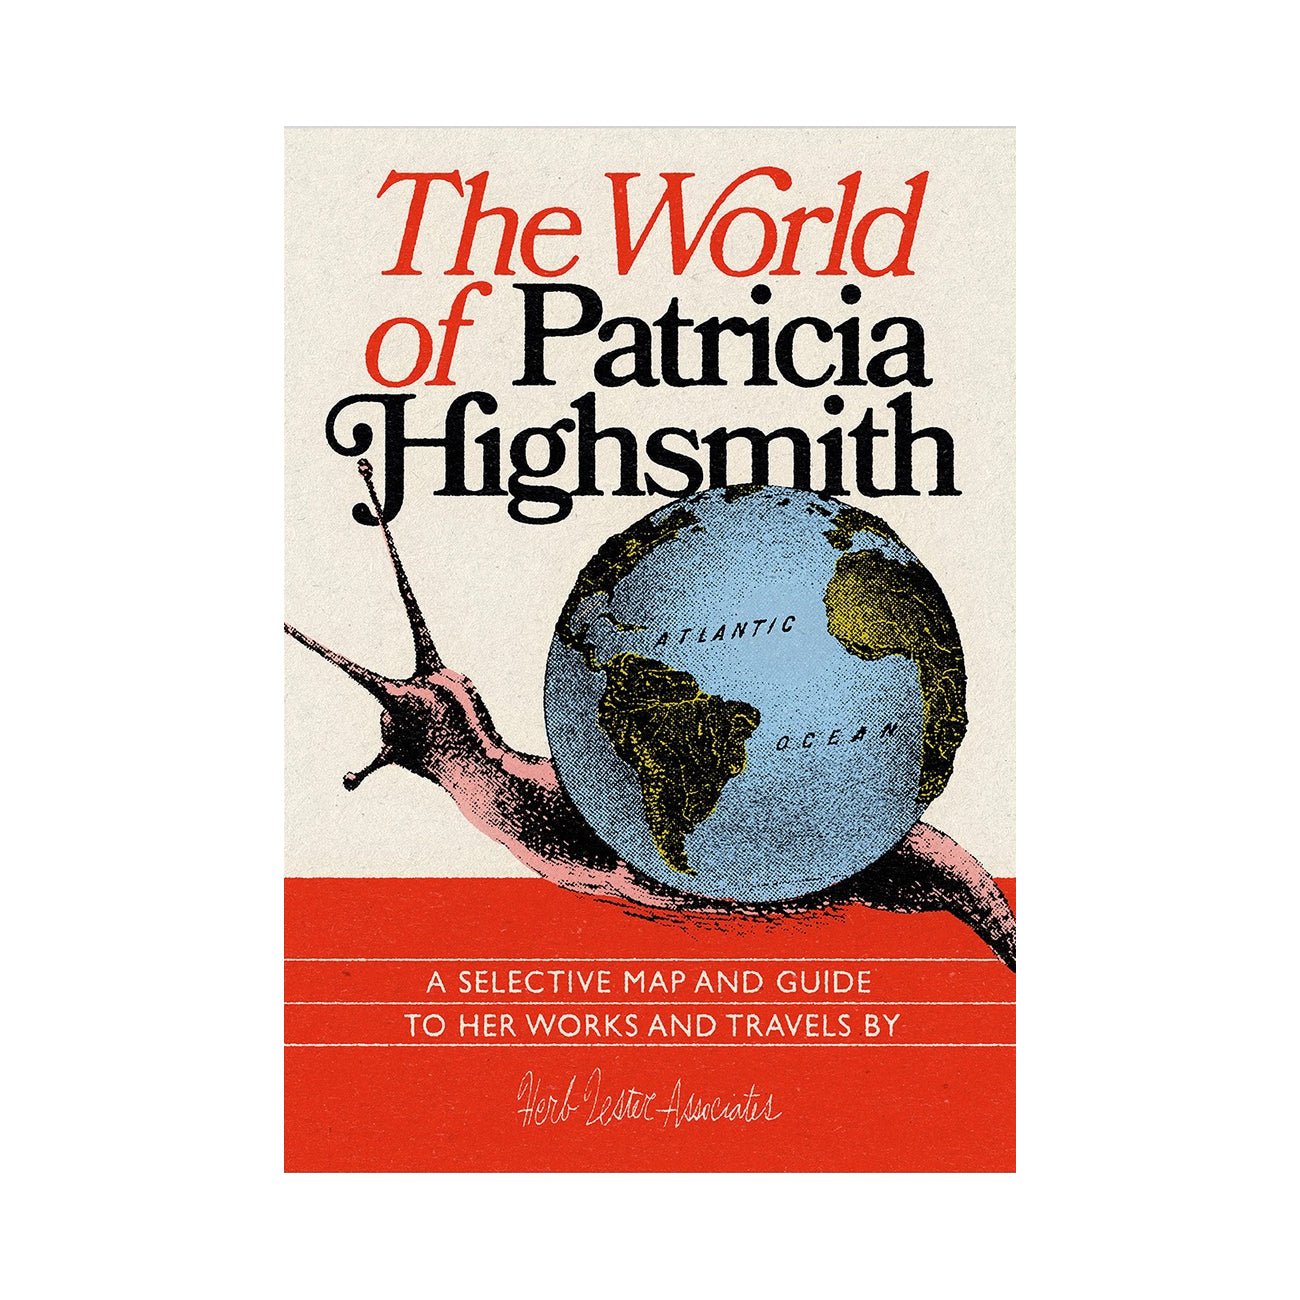 The World of Patricia Highsmith